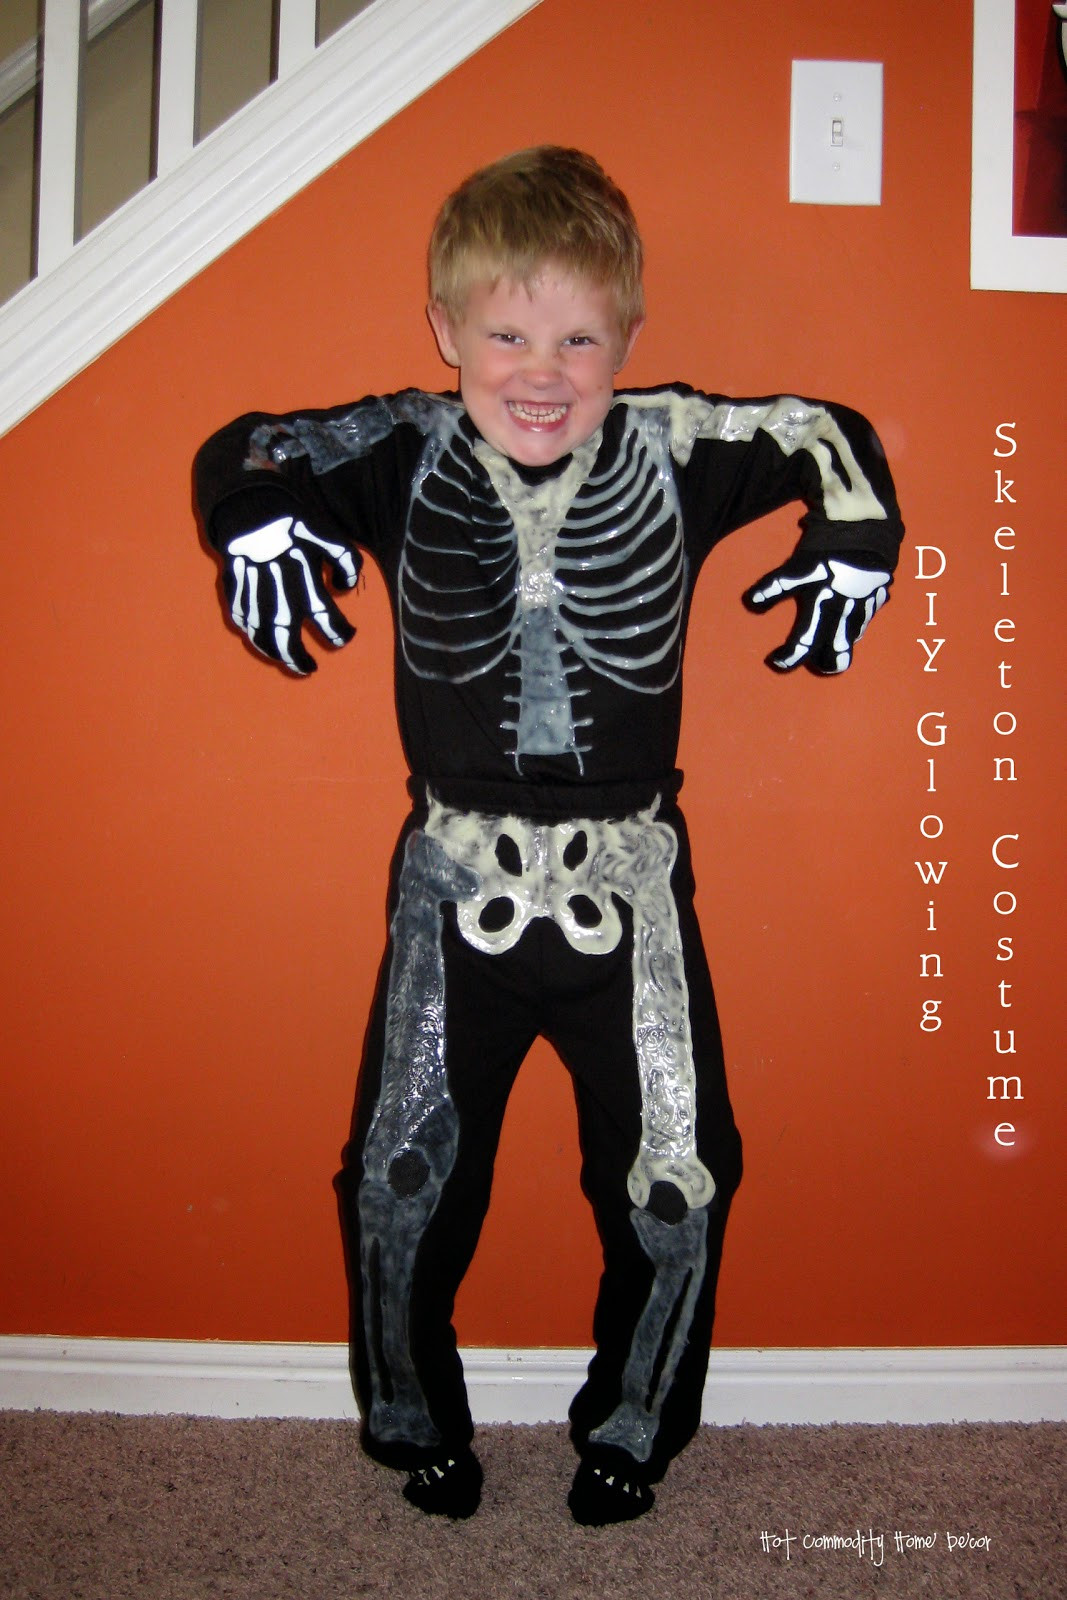 Skeleton Costume DIY
 Hot modity Home Decor DIY Halloween Costumes Glowing